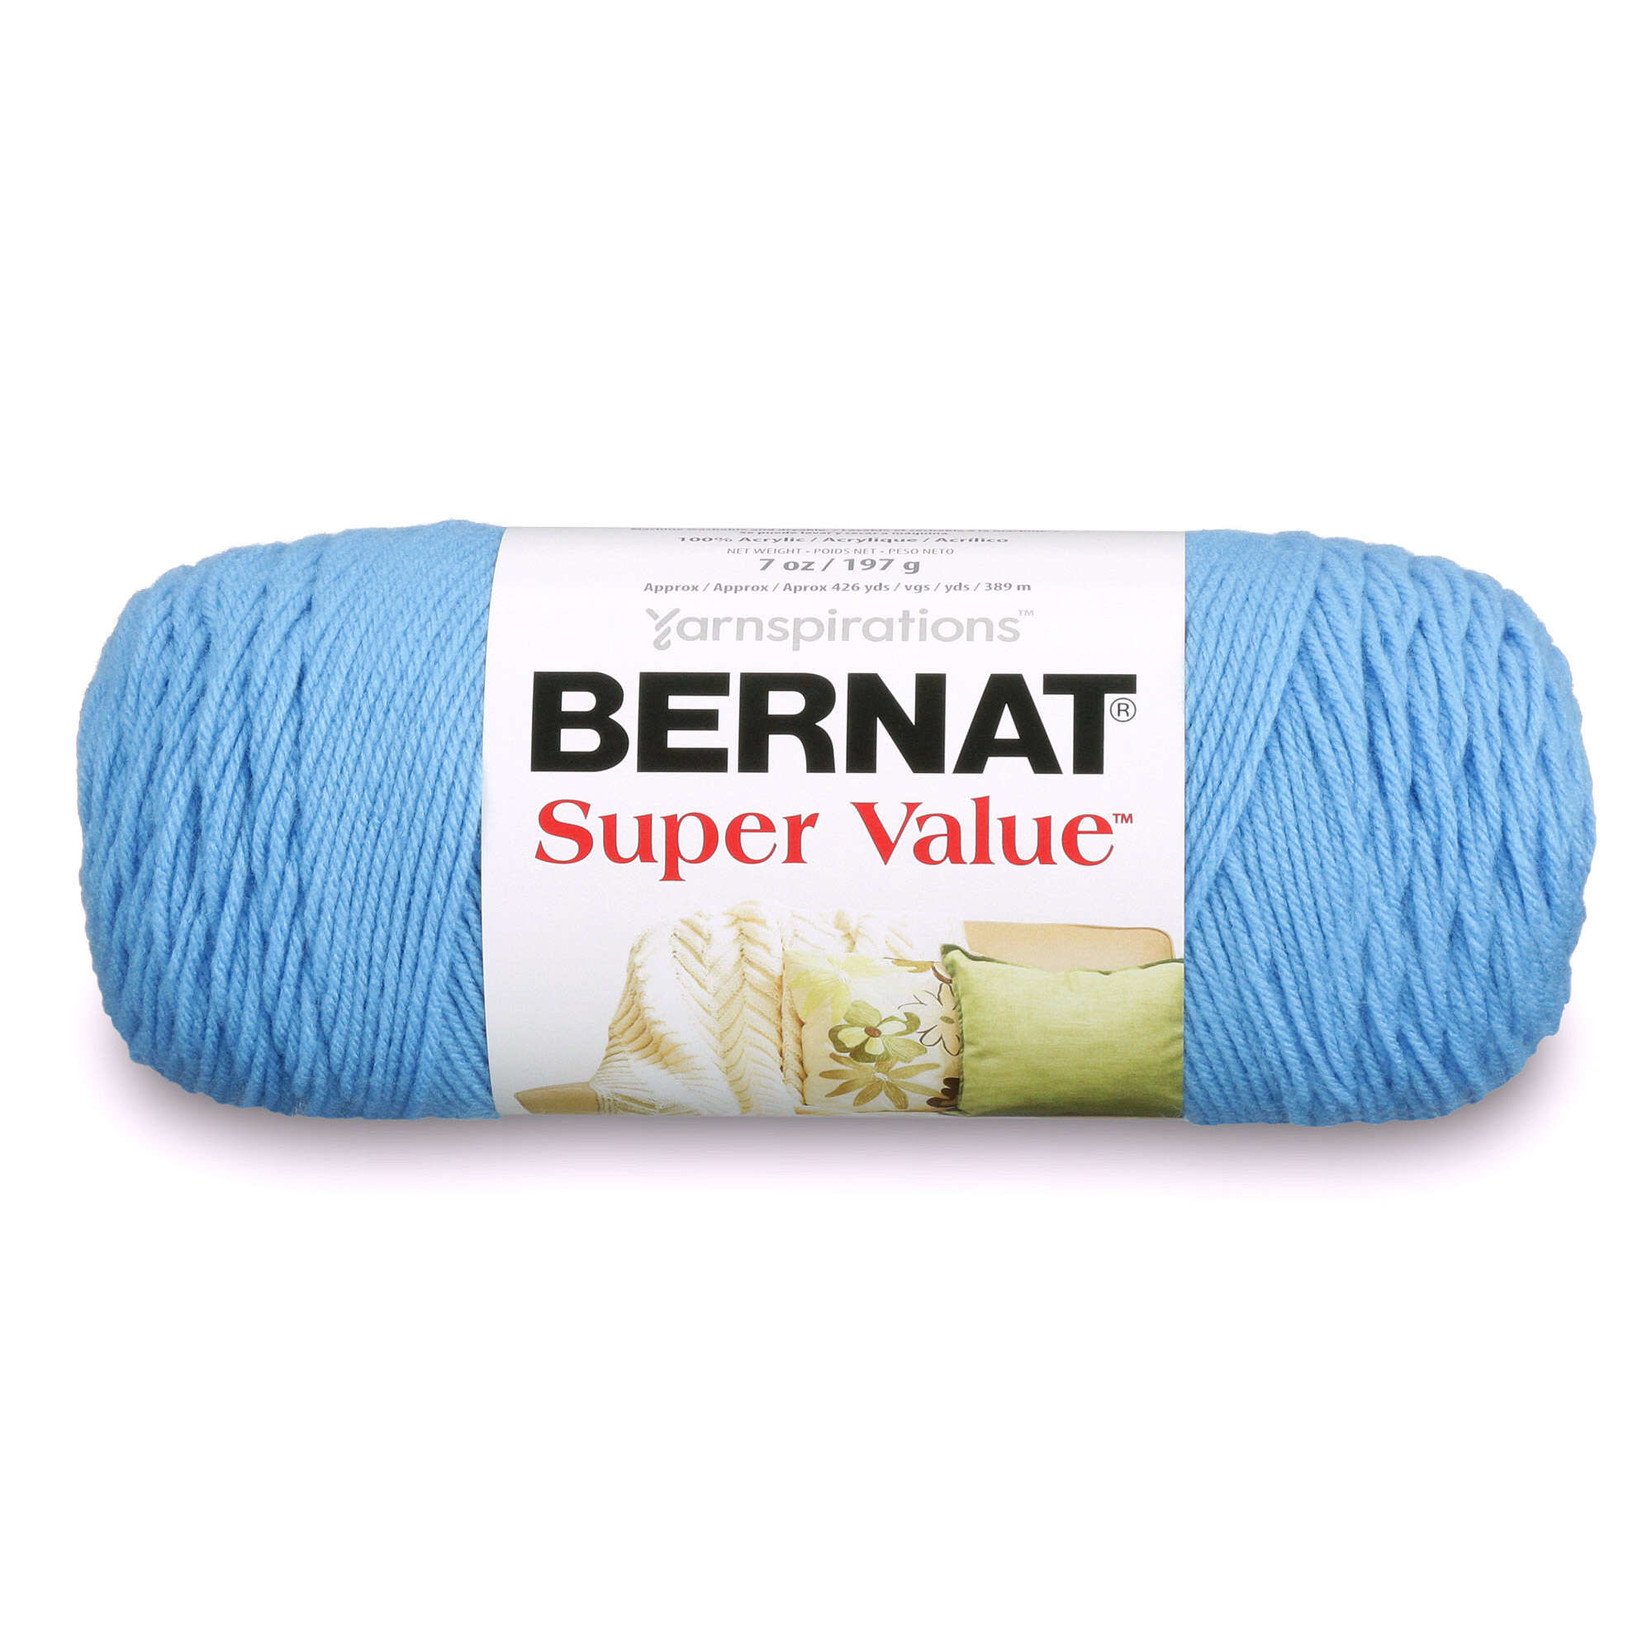 Bernat SuperValue (7 oz) by Bernat